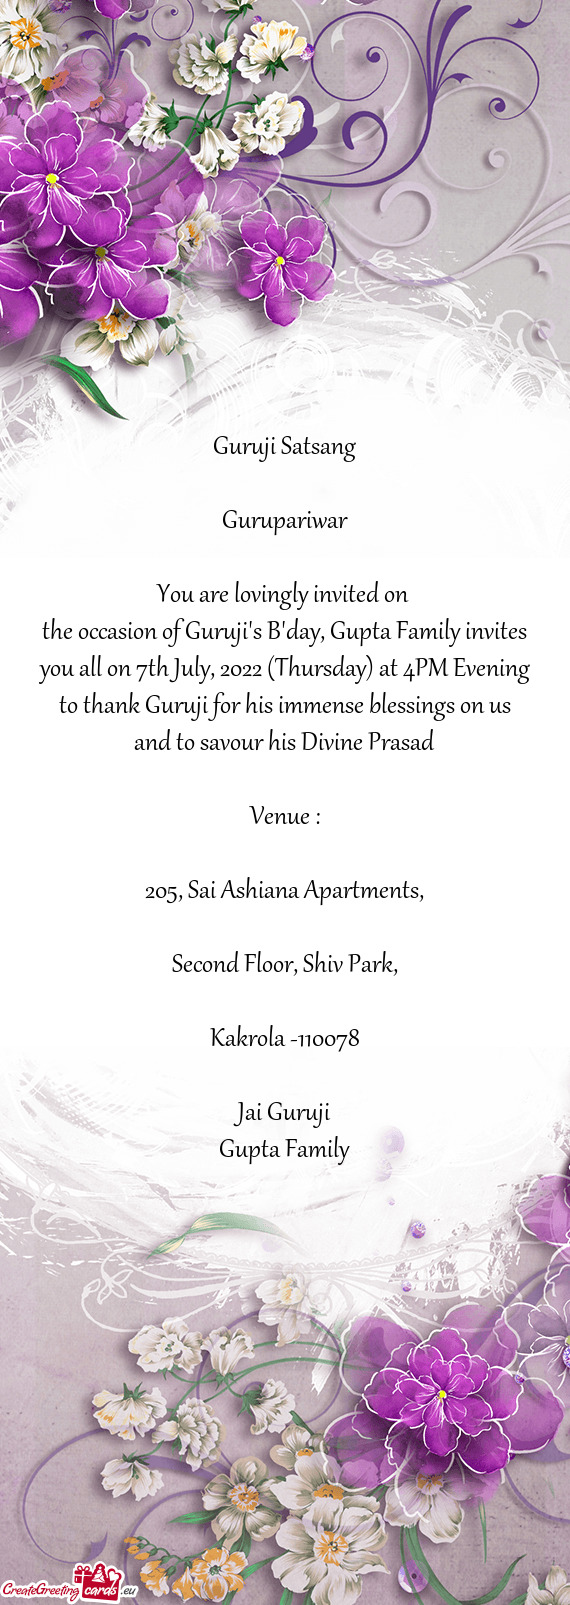 The occasion of Guruji